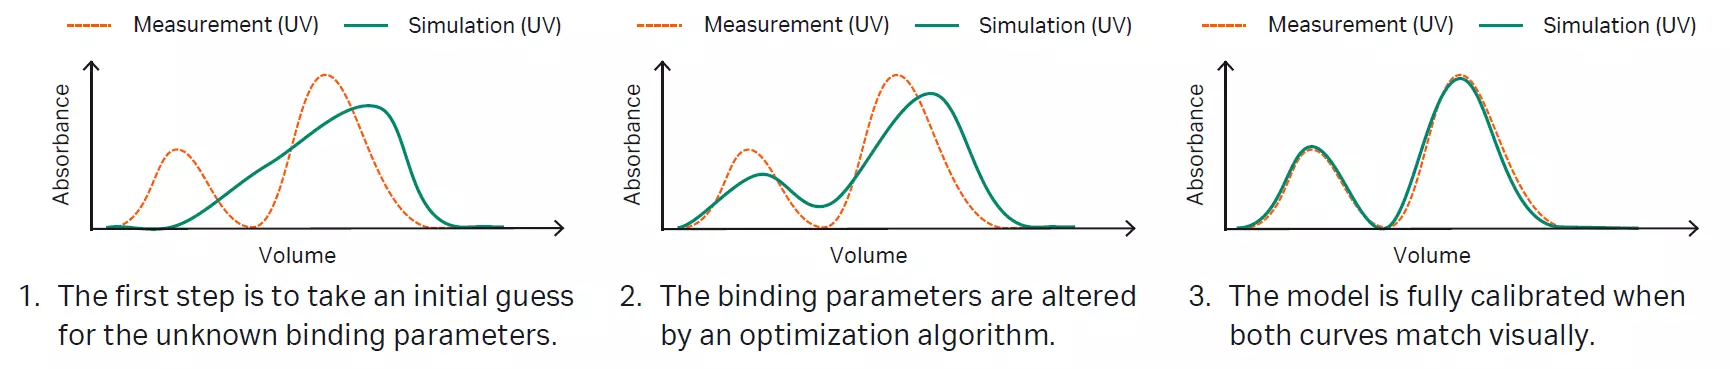 Figure 5: Model calibration